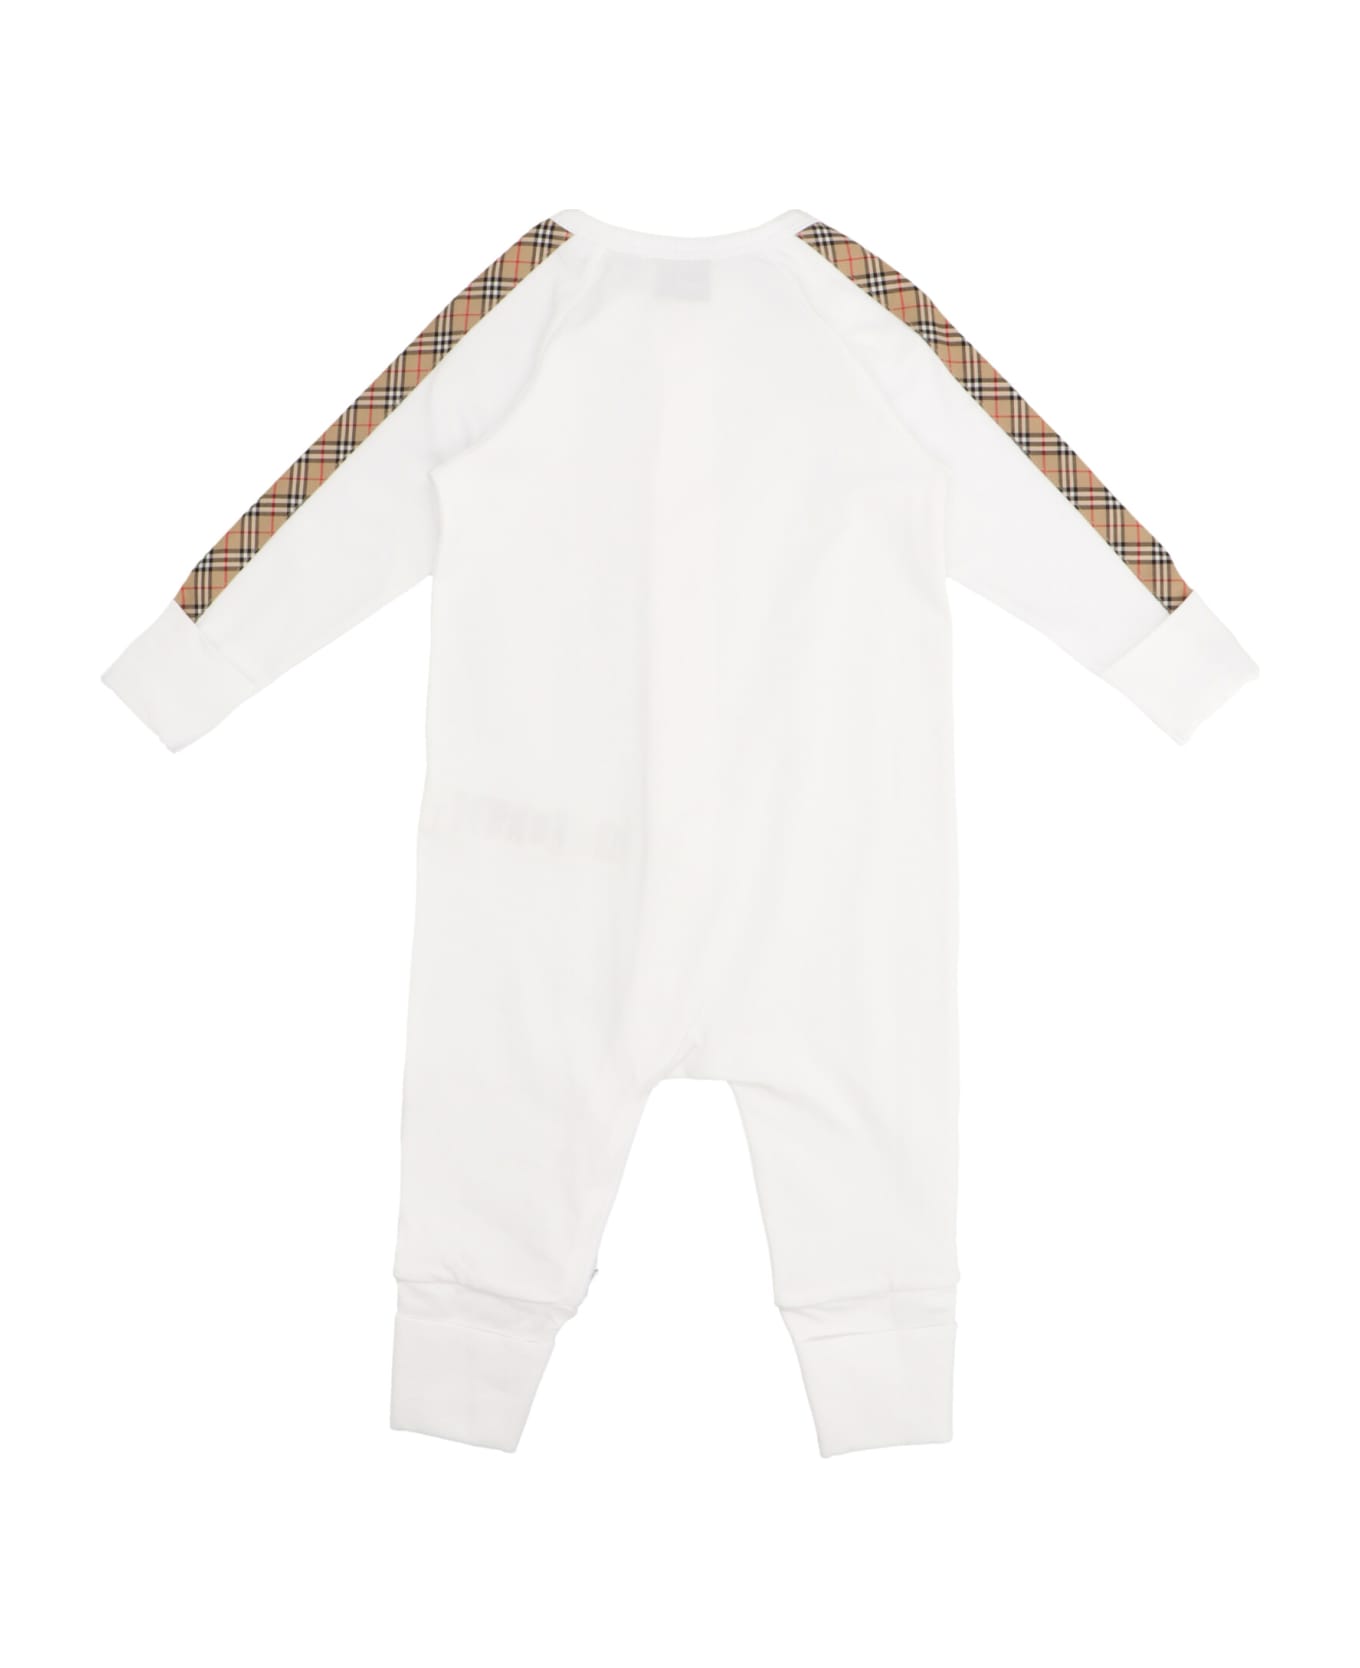 Burberry Jumpsuit, Cap And Bib Baby Set - White